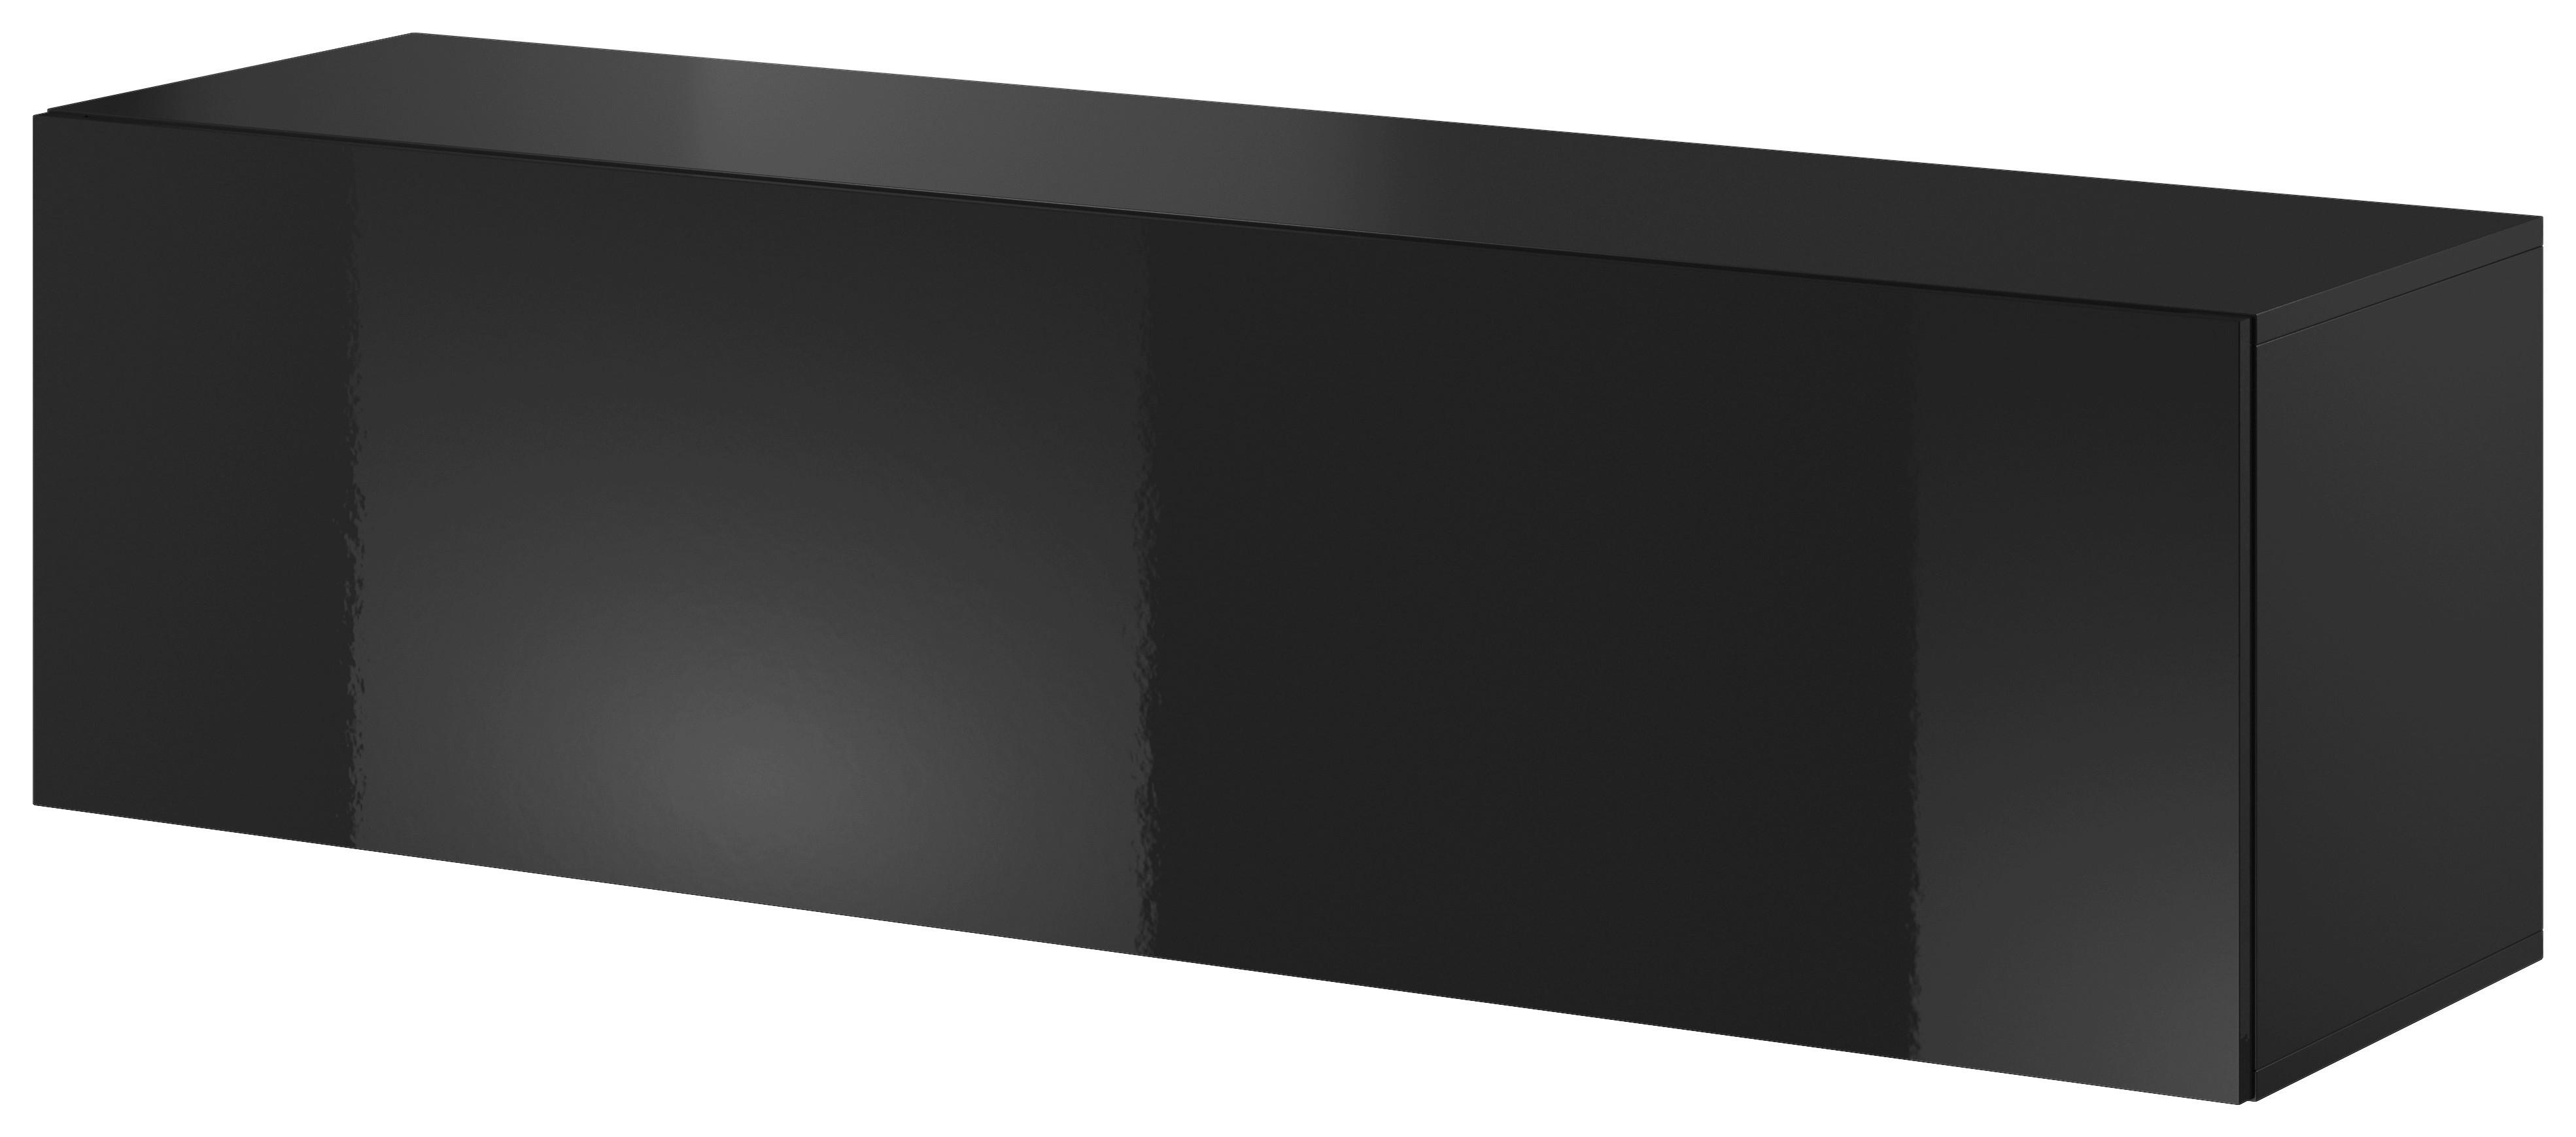 TV-Lowboard VIVIEN schwarz schwarz glanz B/H/T: ca. 140x40x38 cm